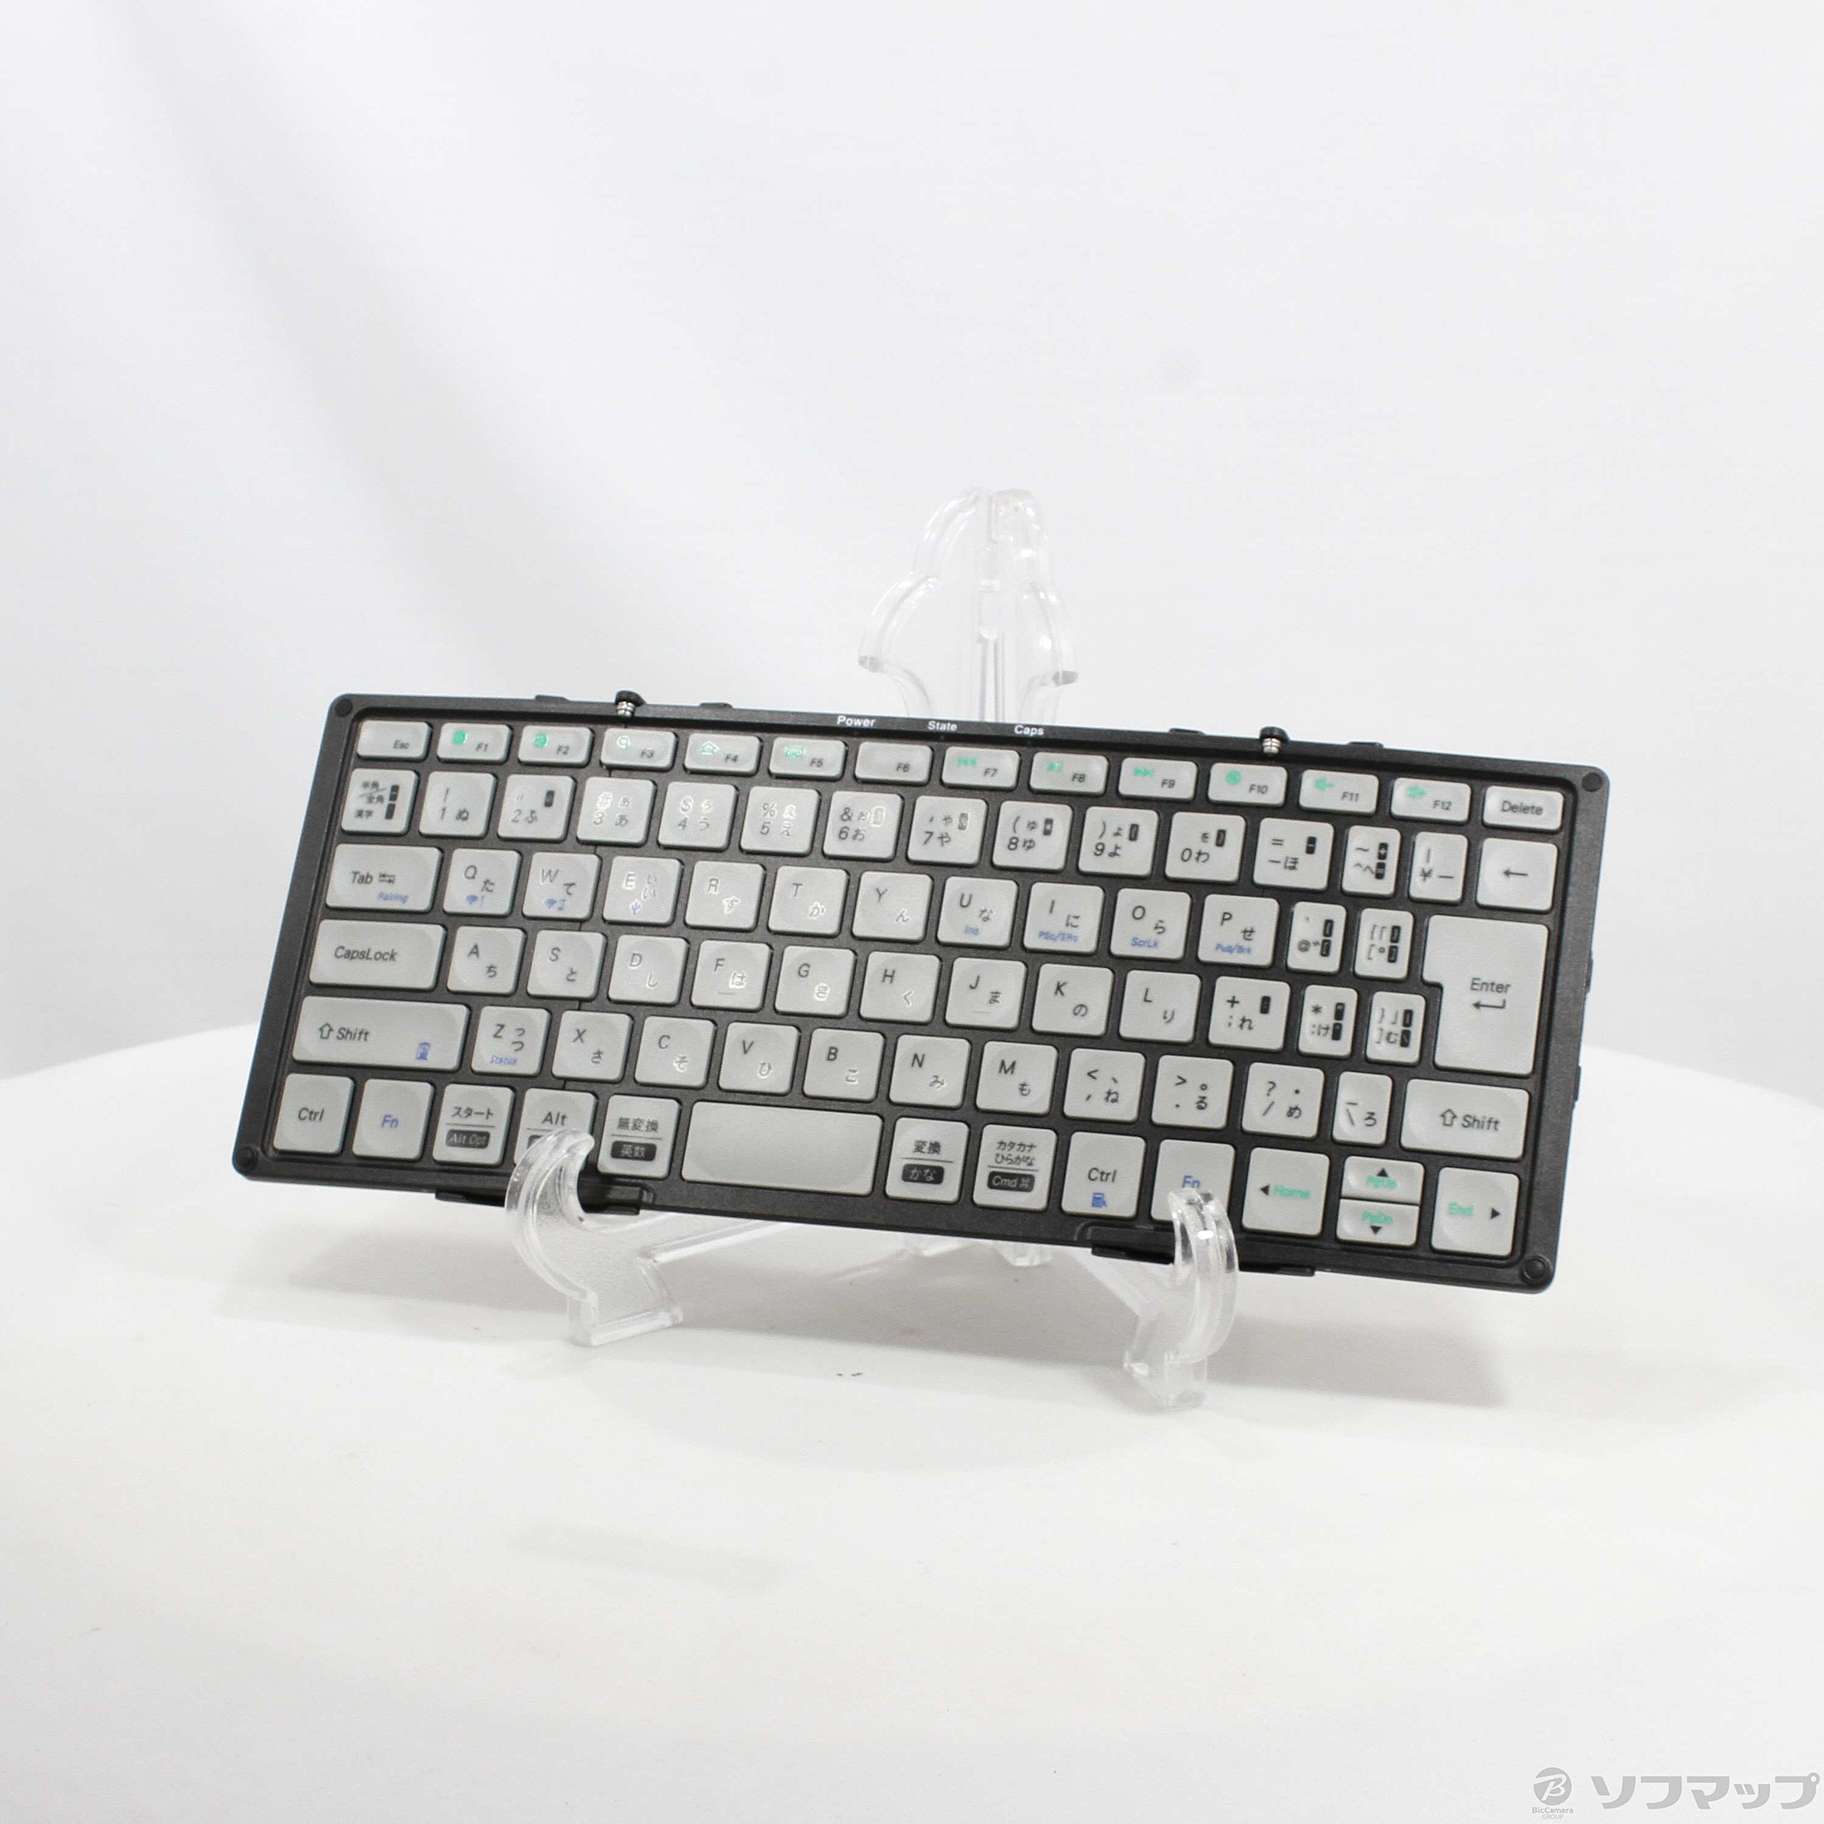 MOBO キーボード MOBO Keyboard2 - キーボード